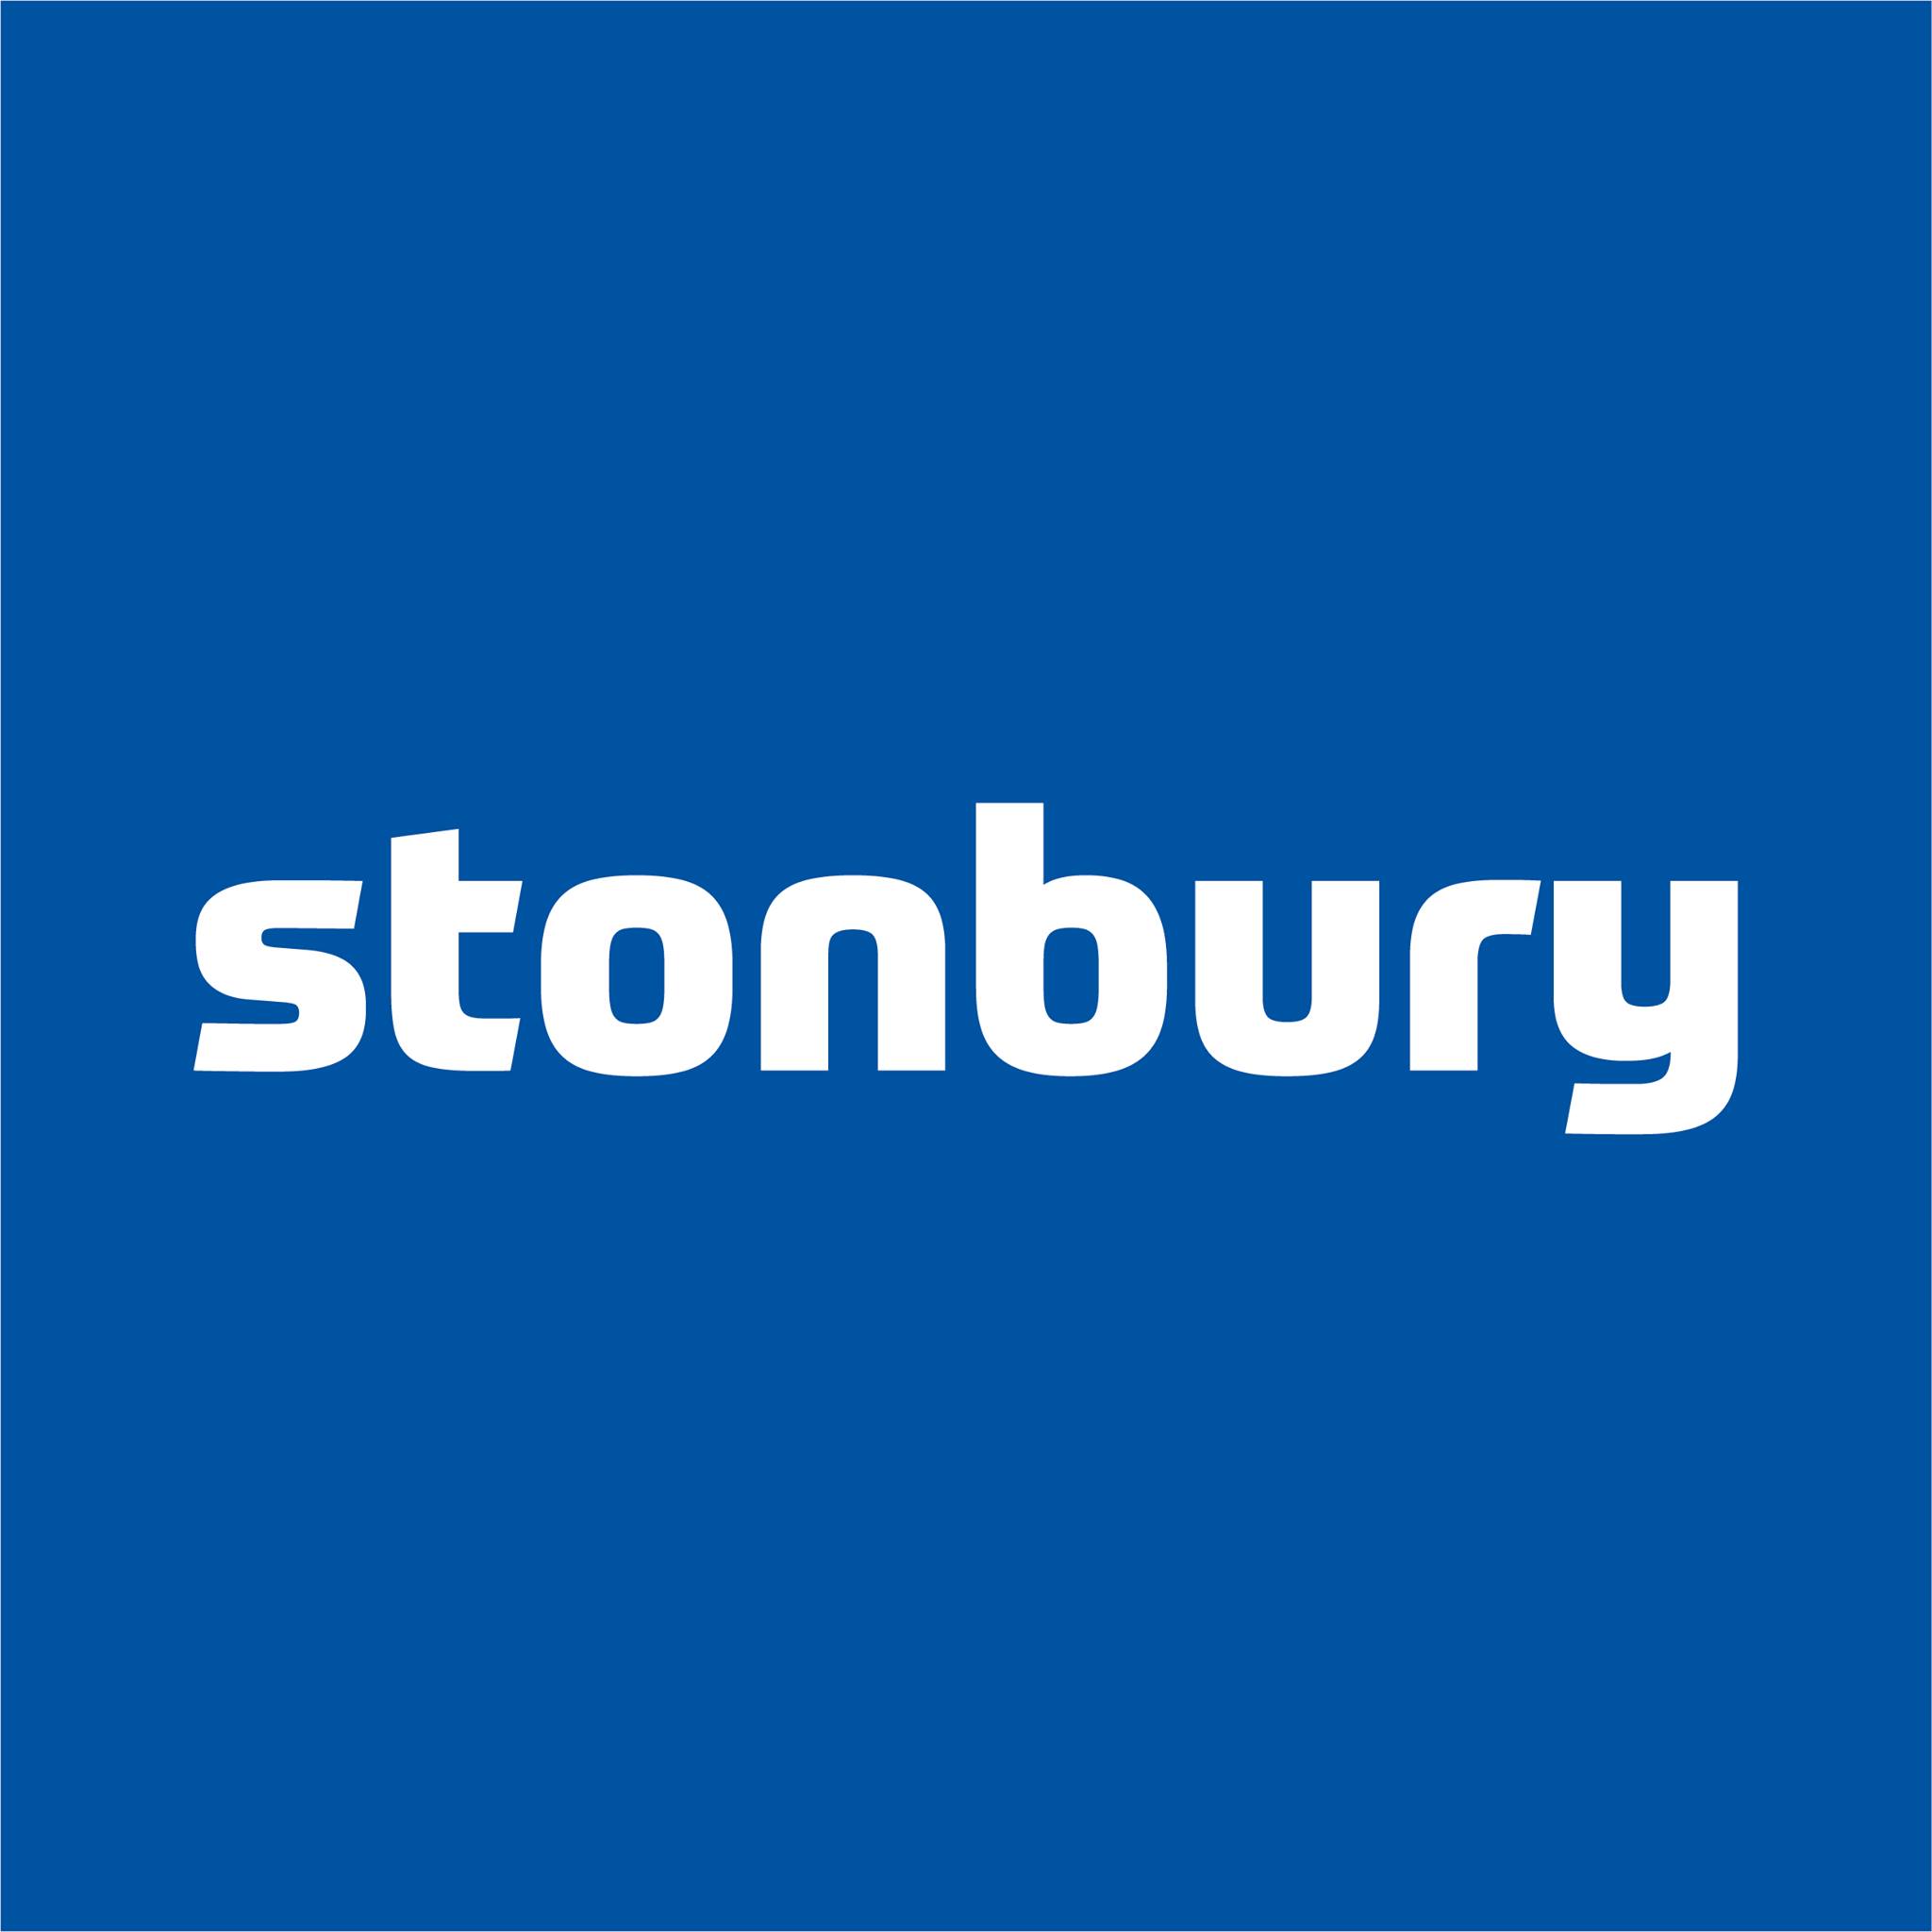 Stonbury - Facilities Inspection Checklist